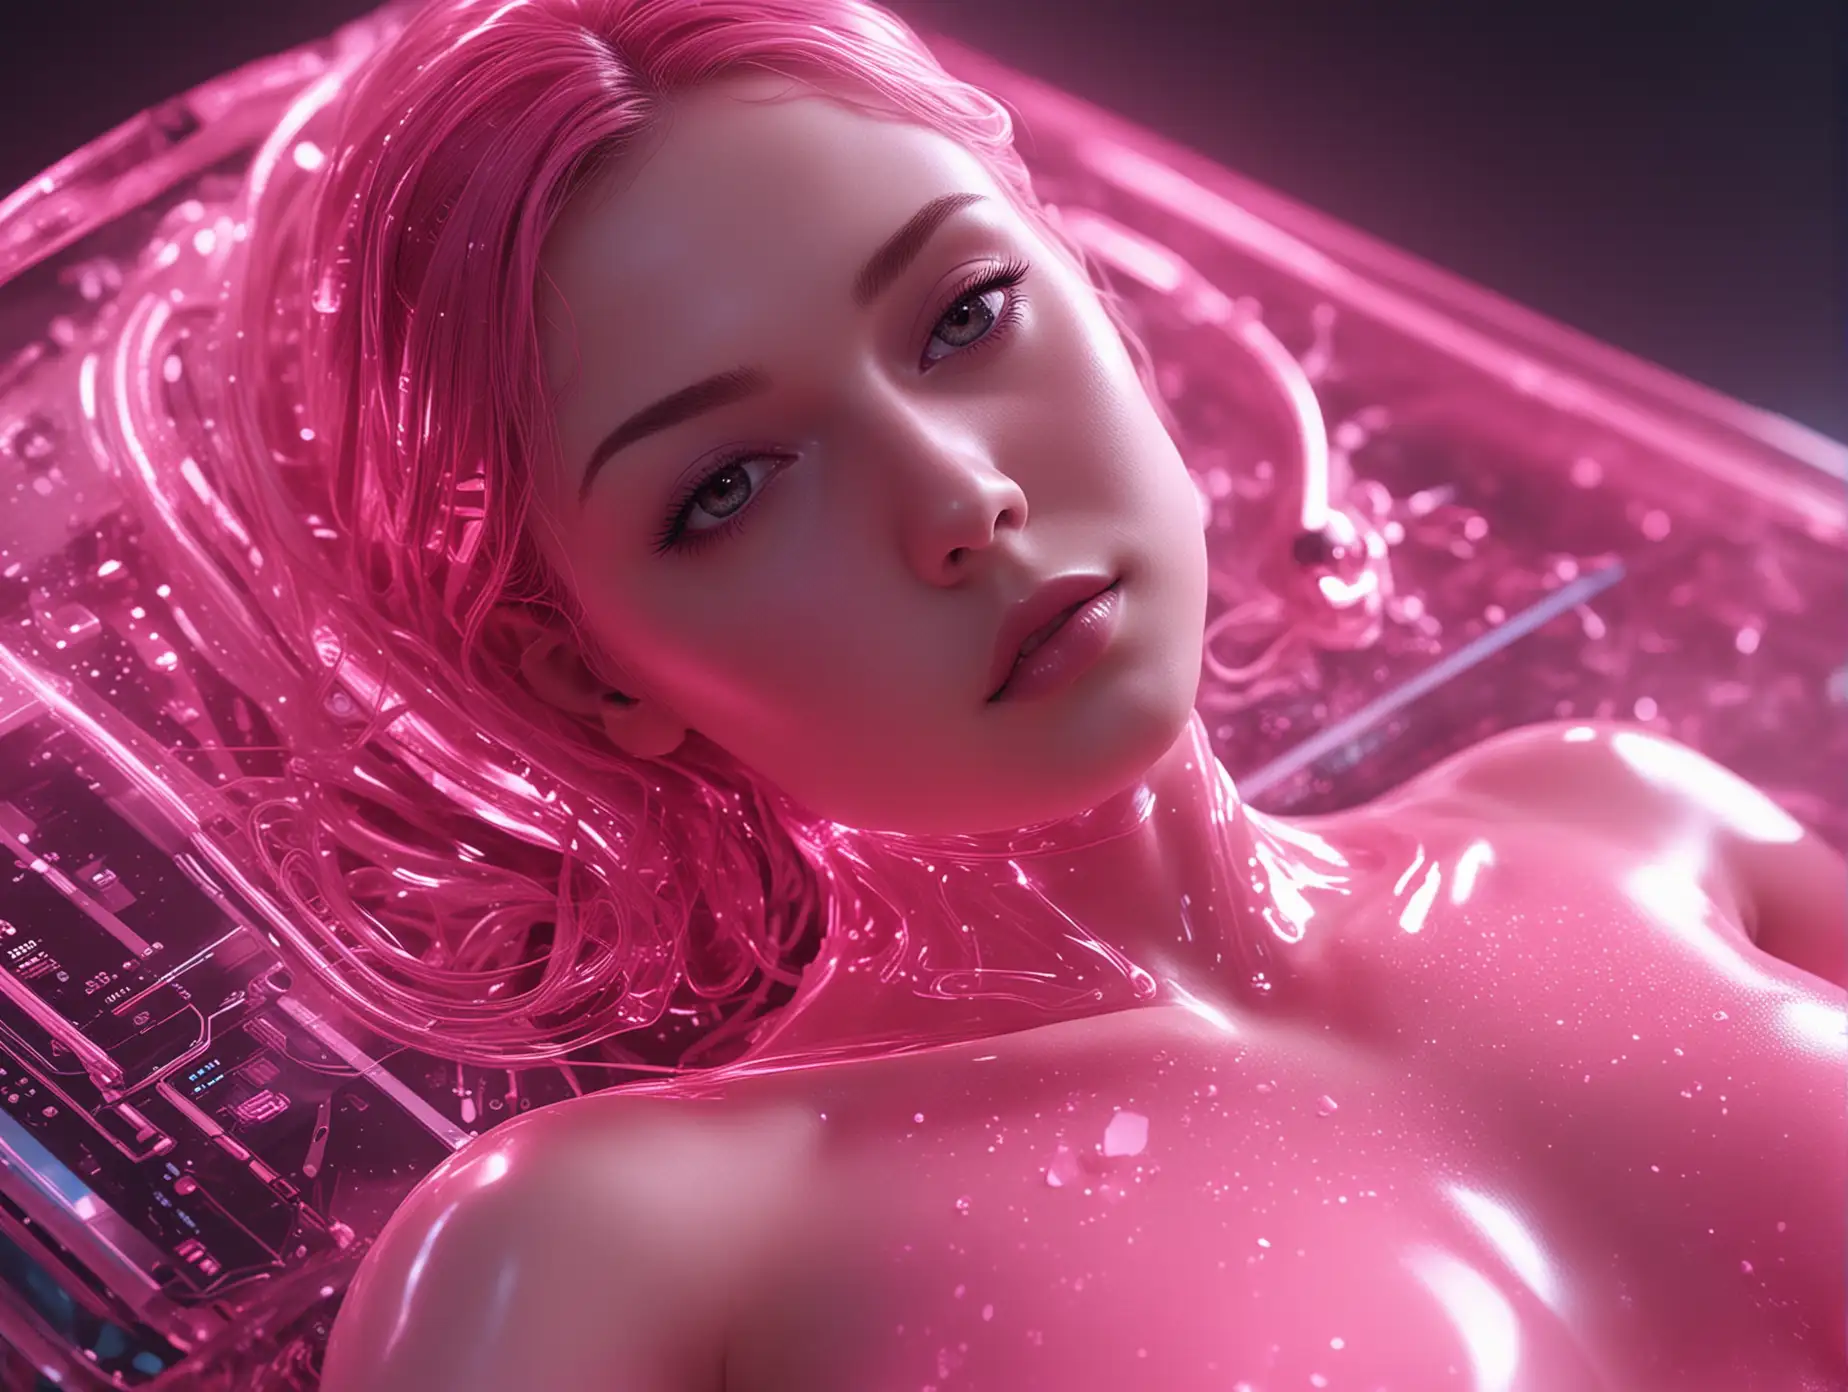 Futuristic Laboratory AI Creates Android Girl in Glowing Pink Goo